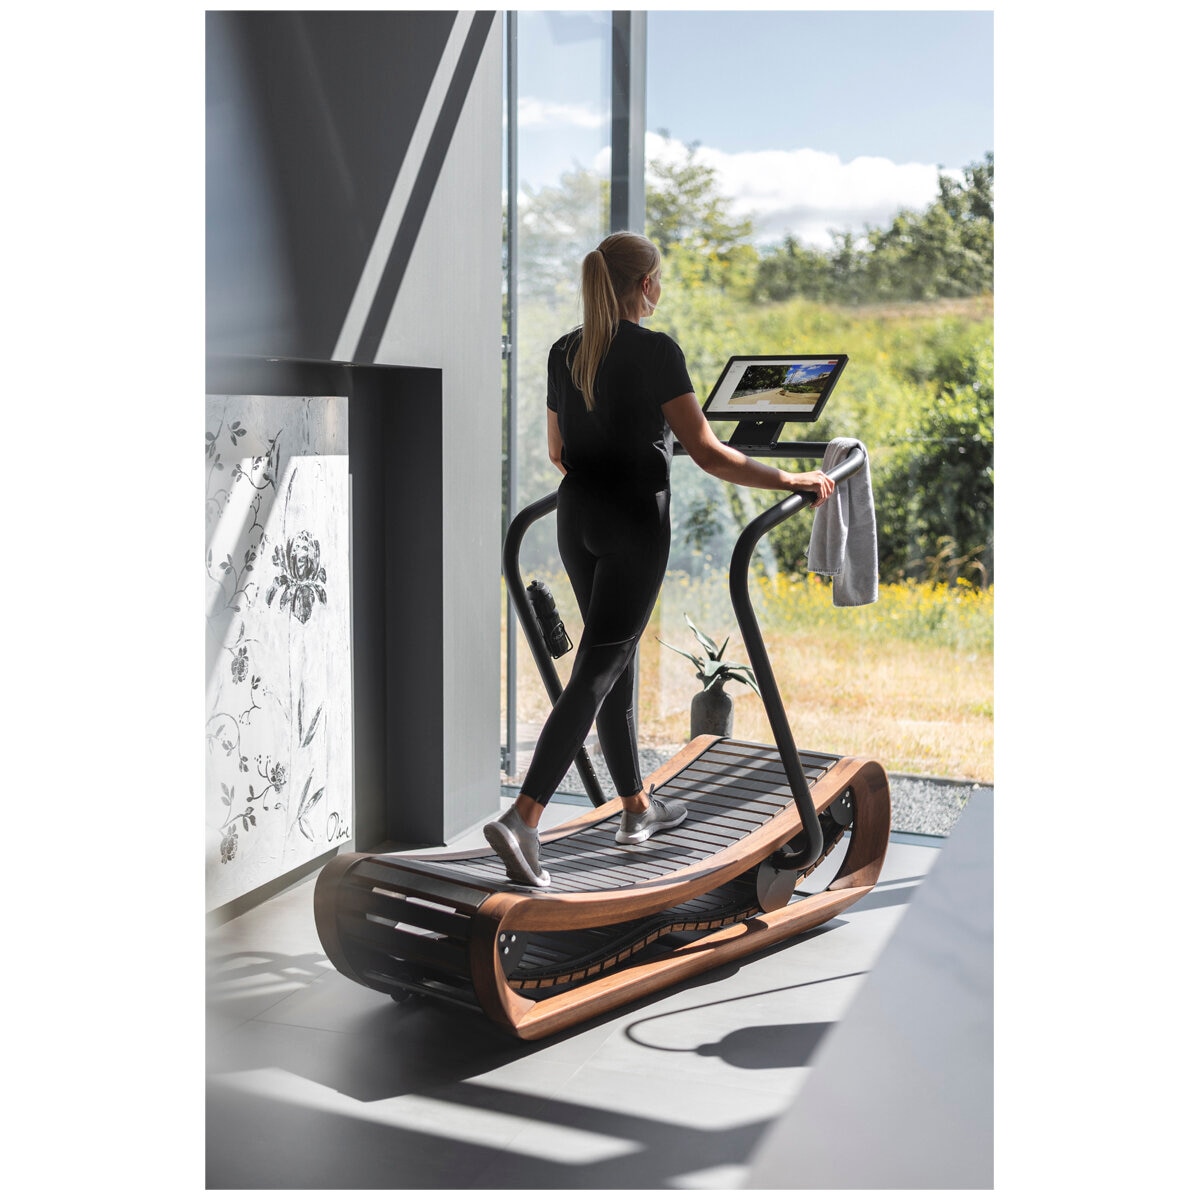 Nohrd Heritage Sprintbok Treadmill